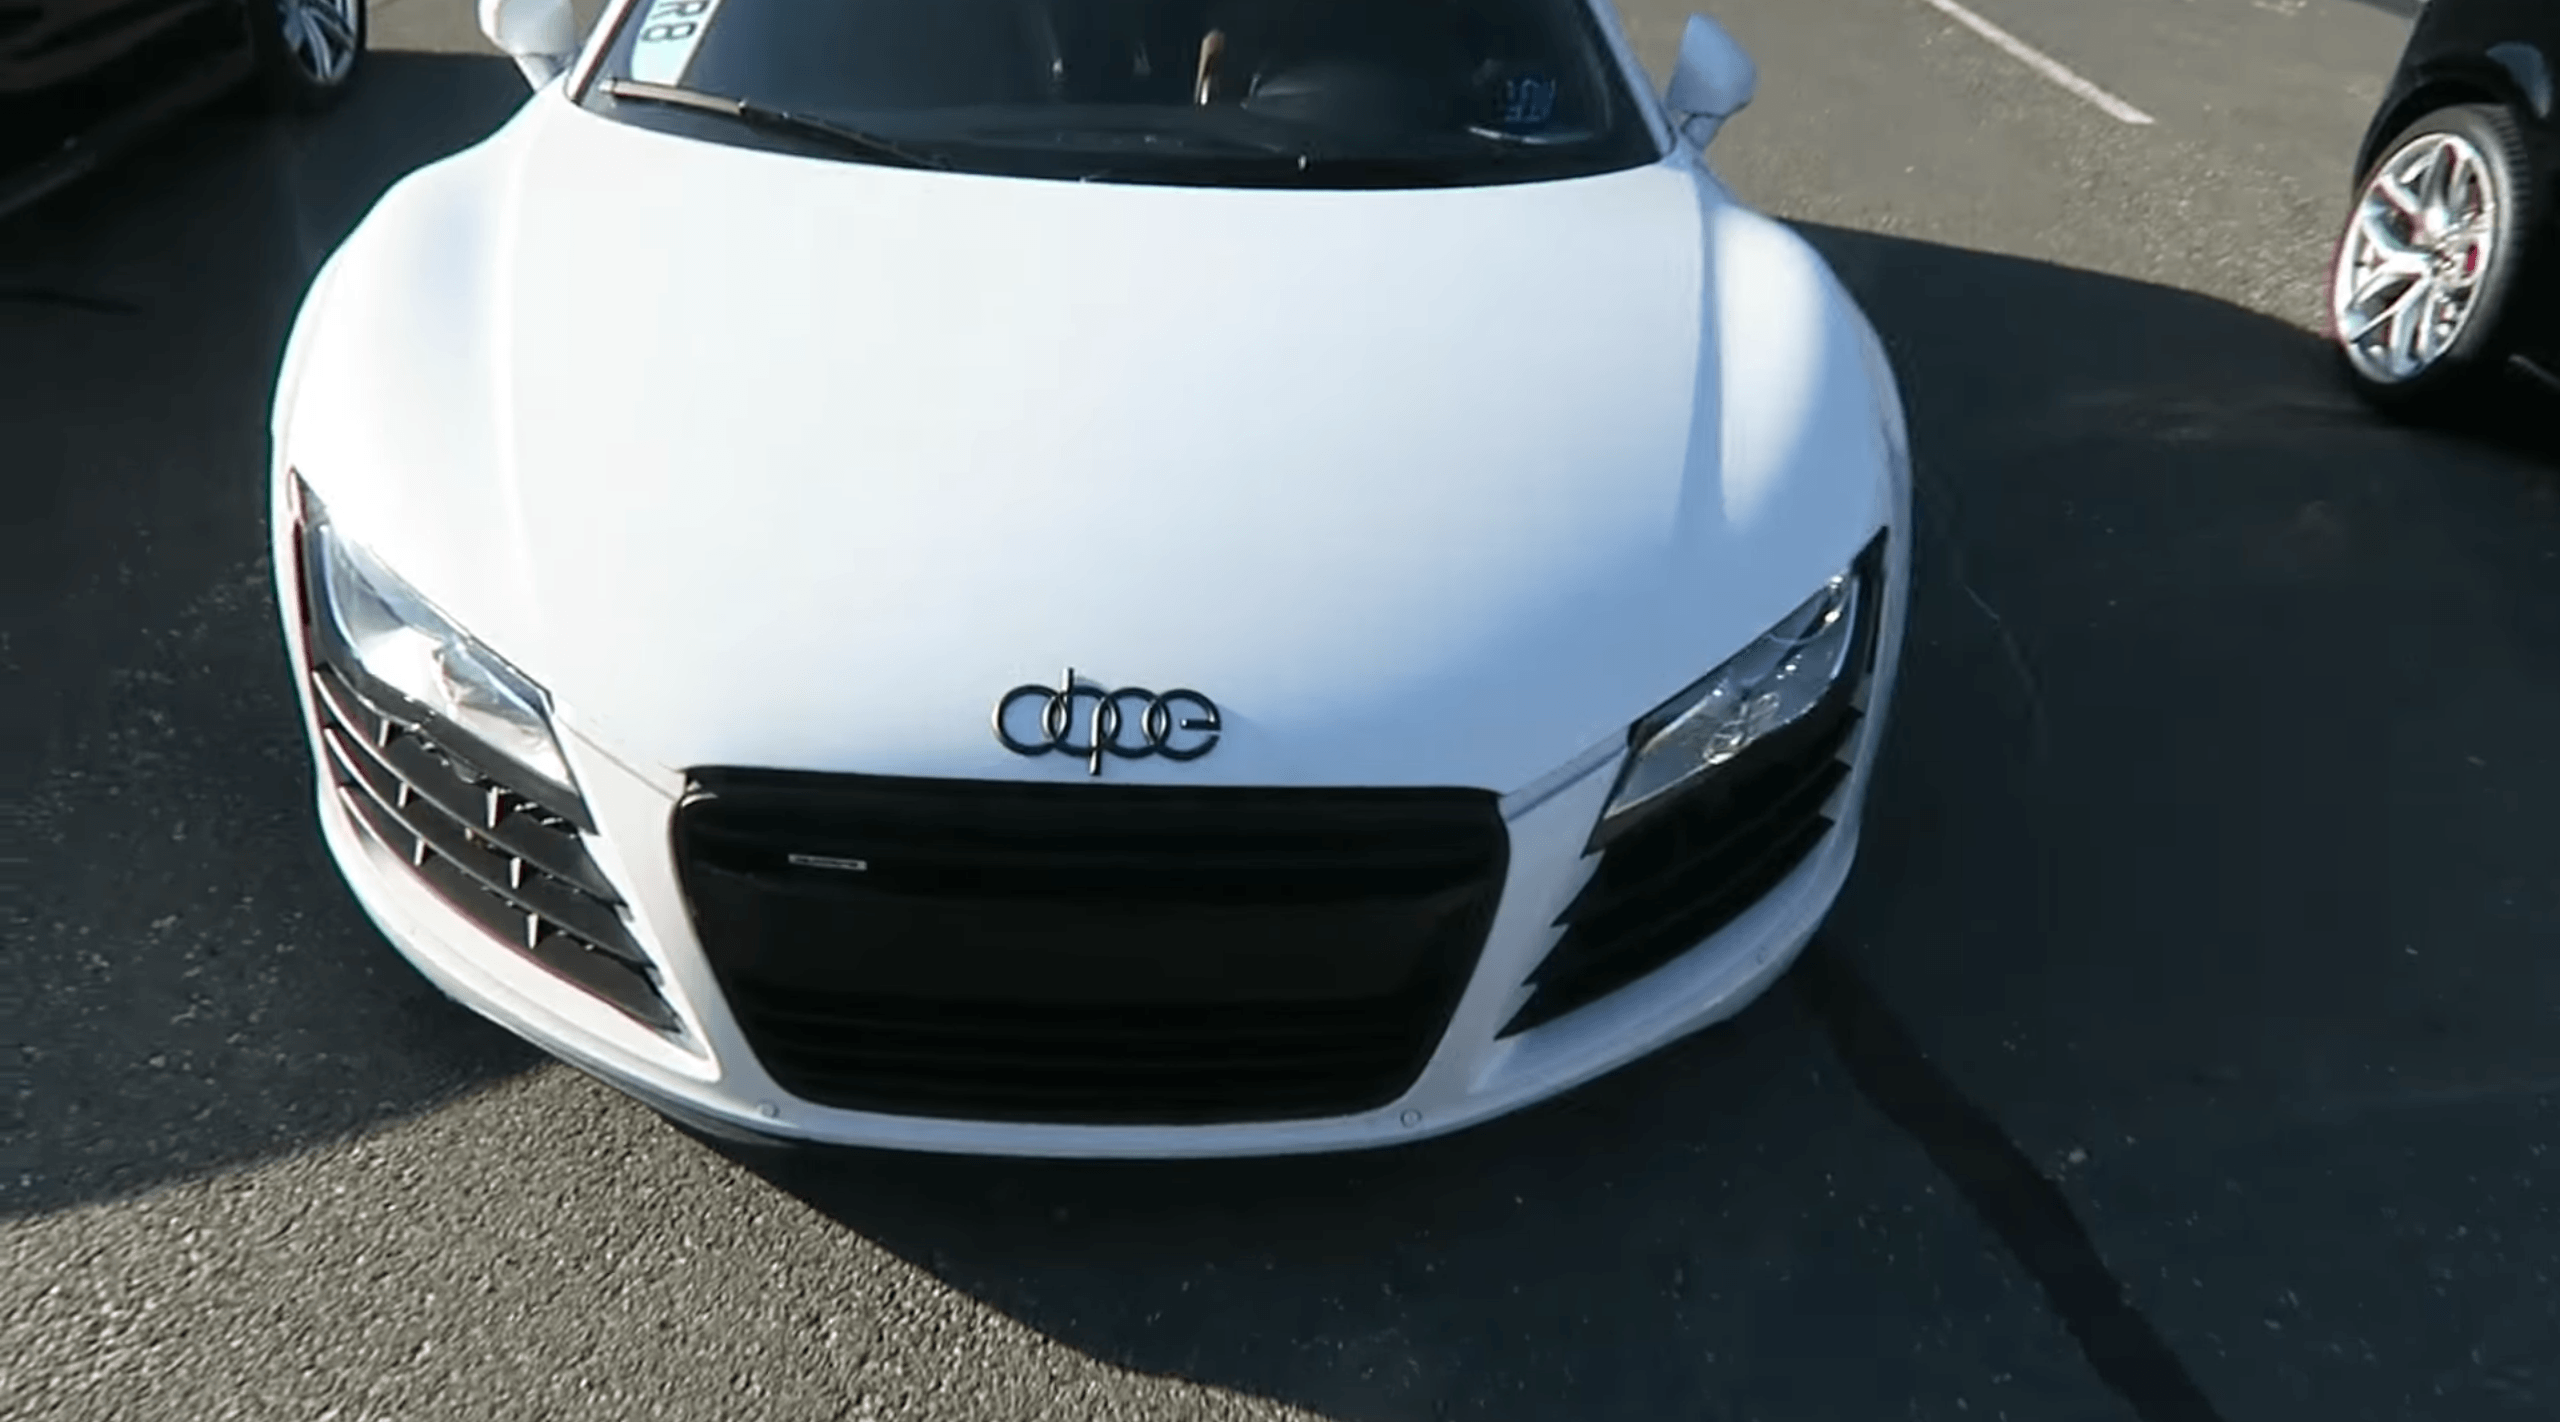 Audi Dope Logo - This audi hood ornament spells 